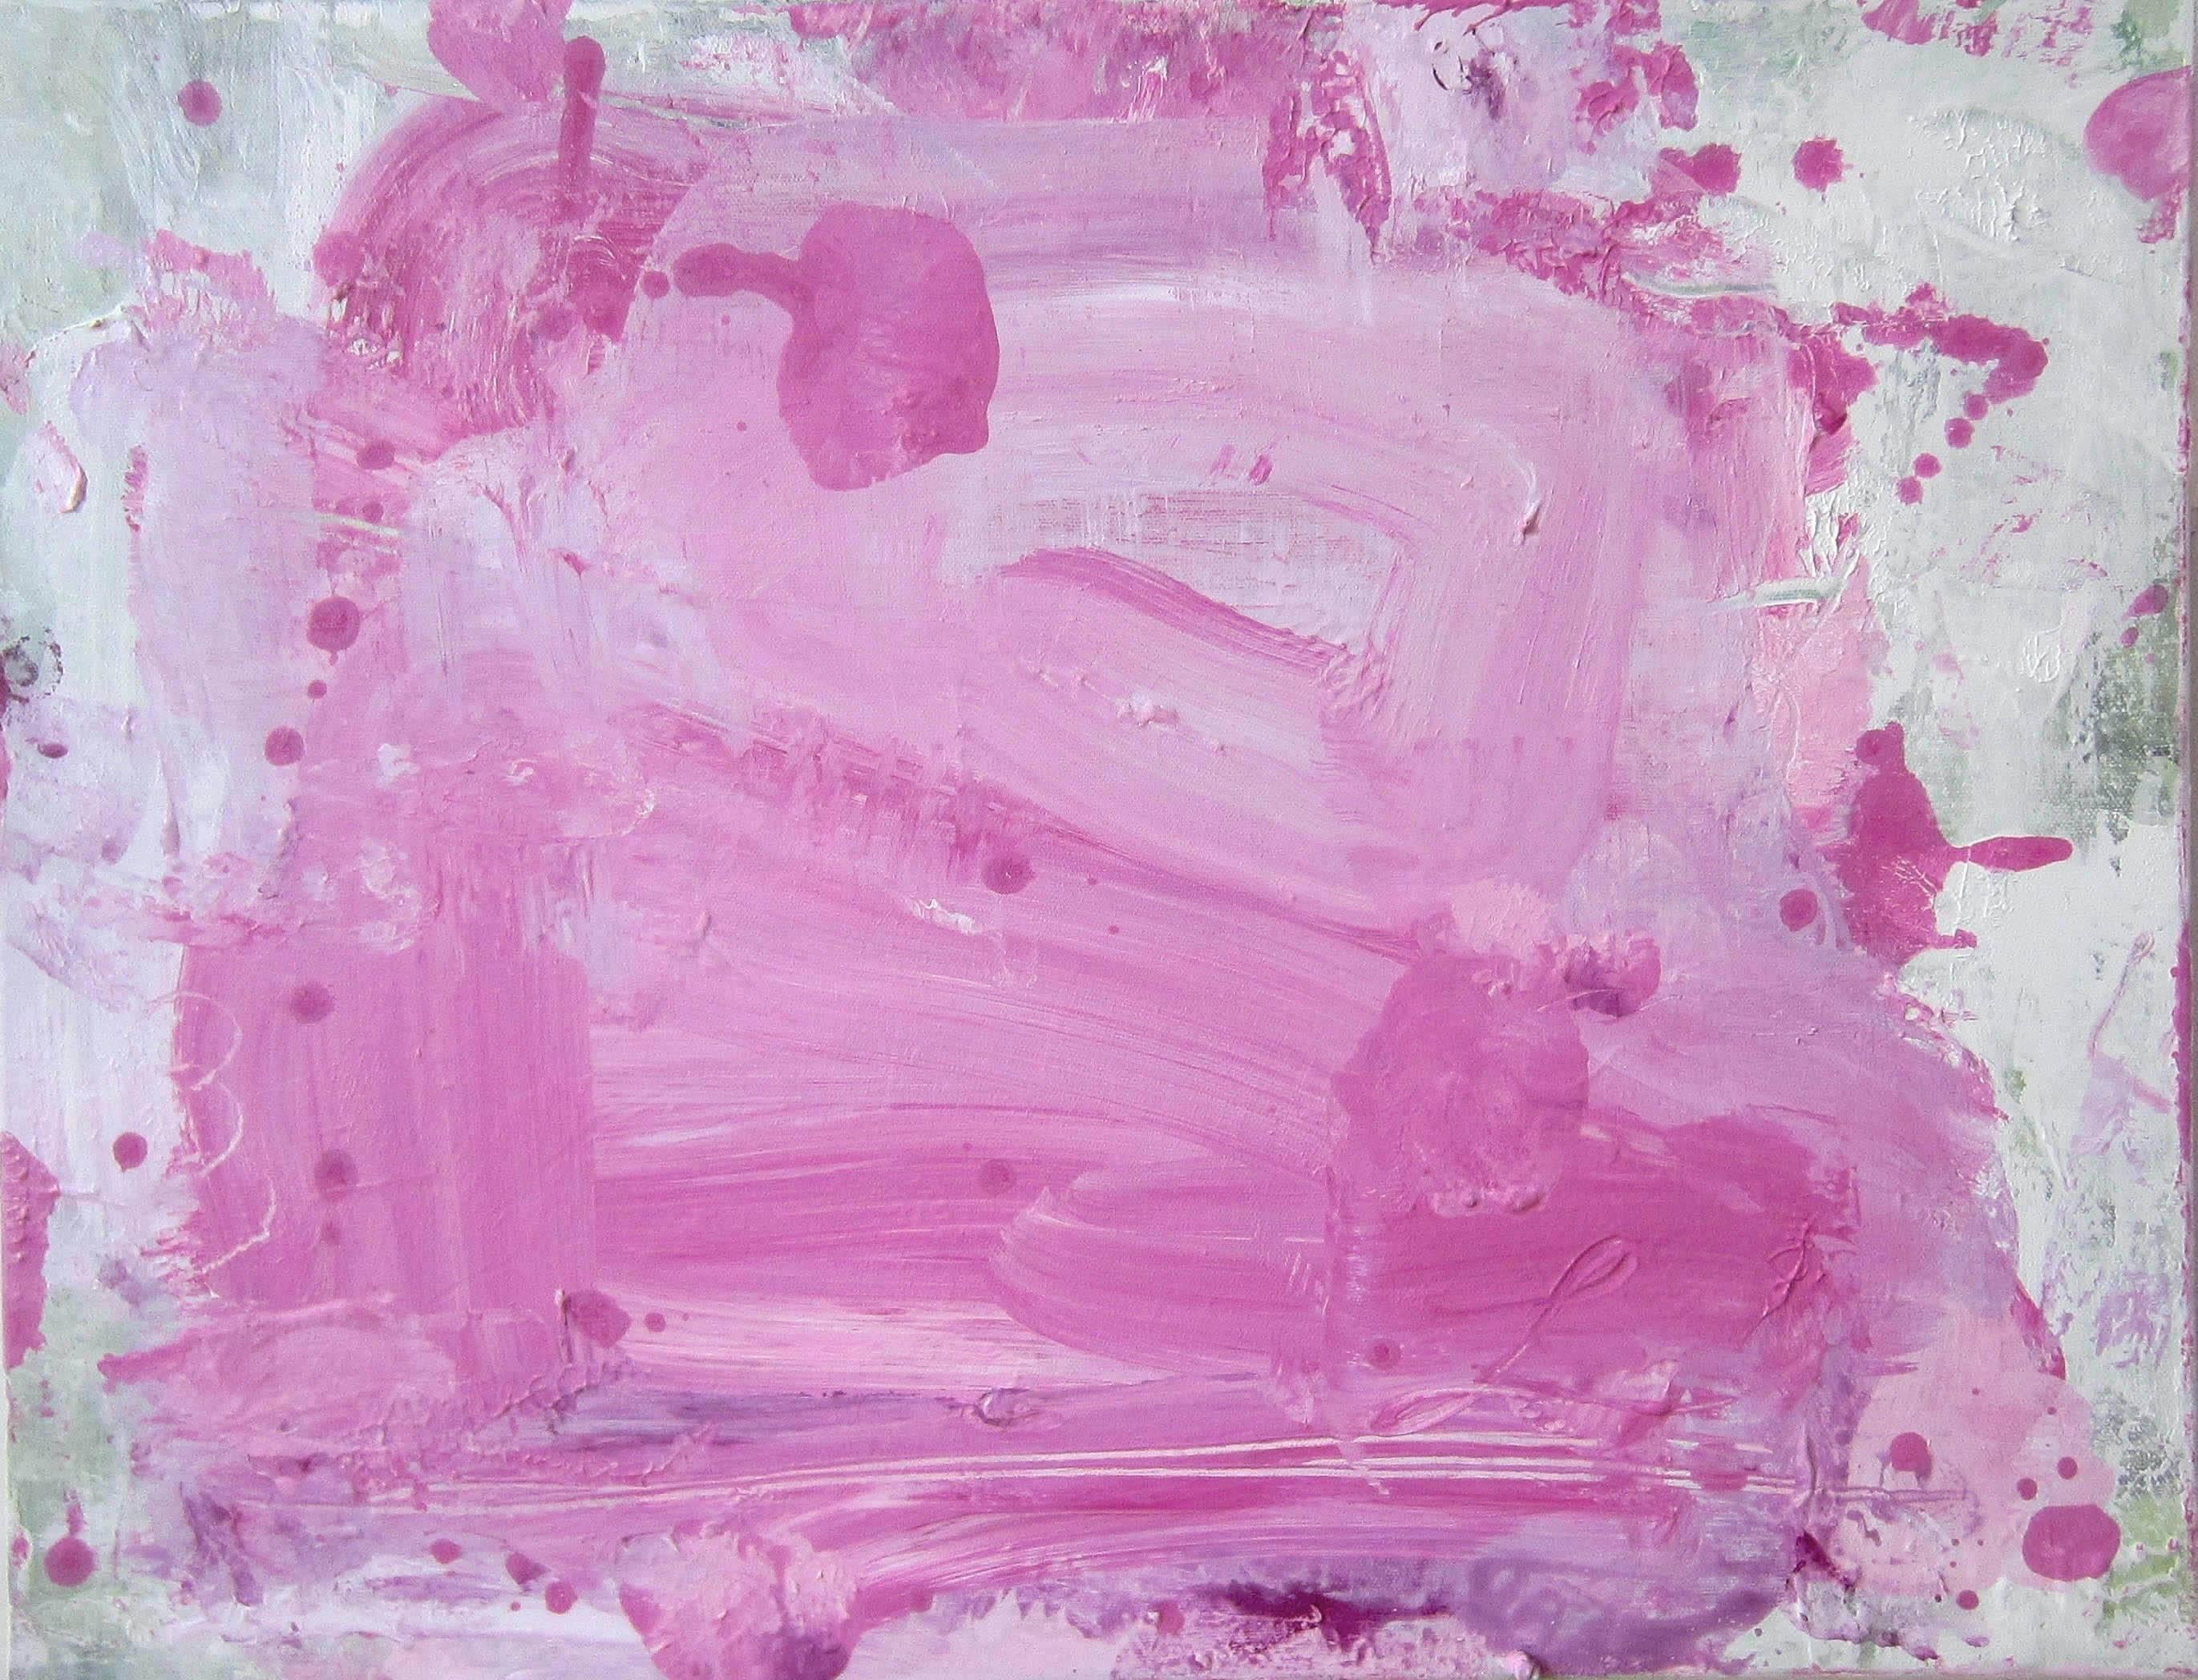 Abstract Painting Lisa Fellerson - Peinture expressionniste abstraite sur toile, rose et grise, Effervescent